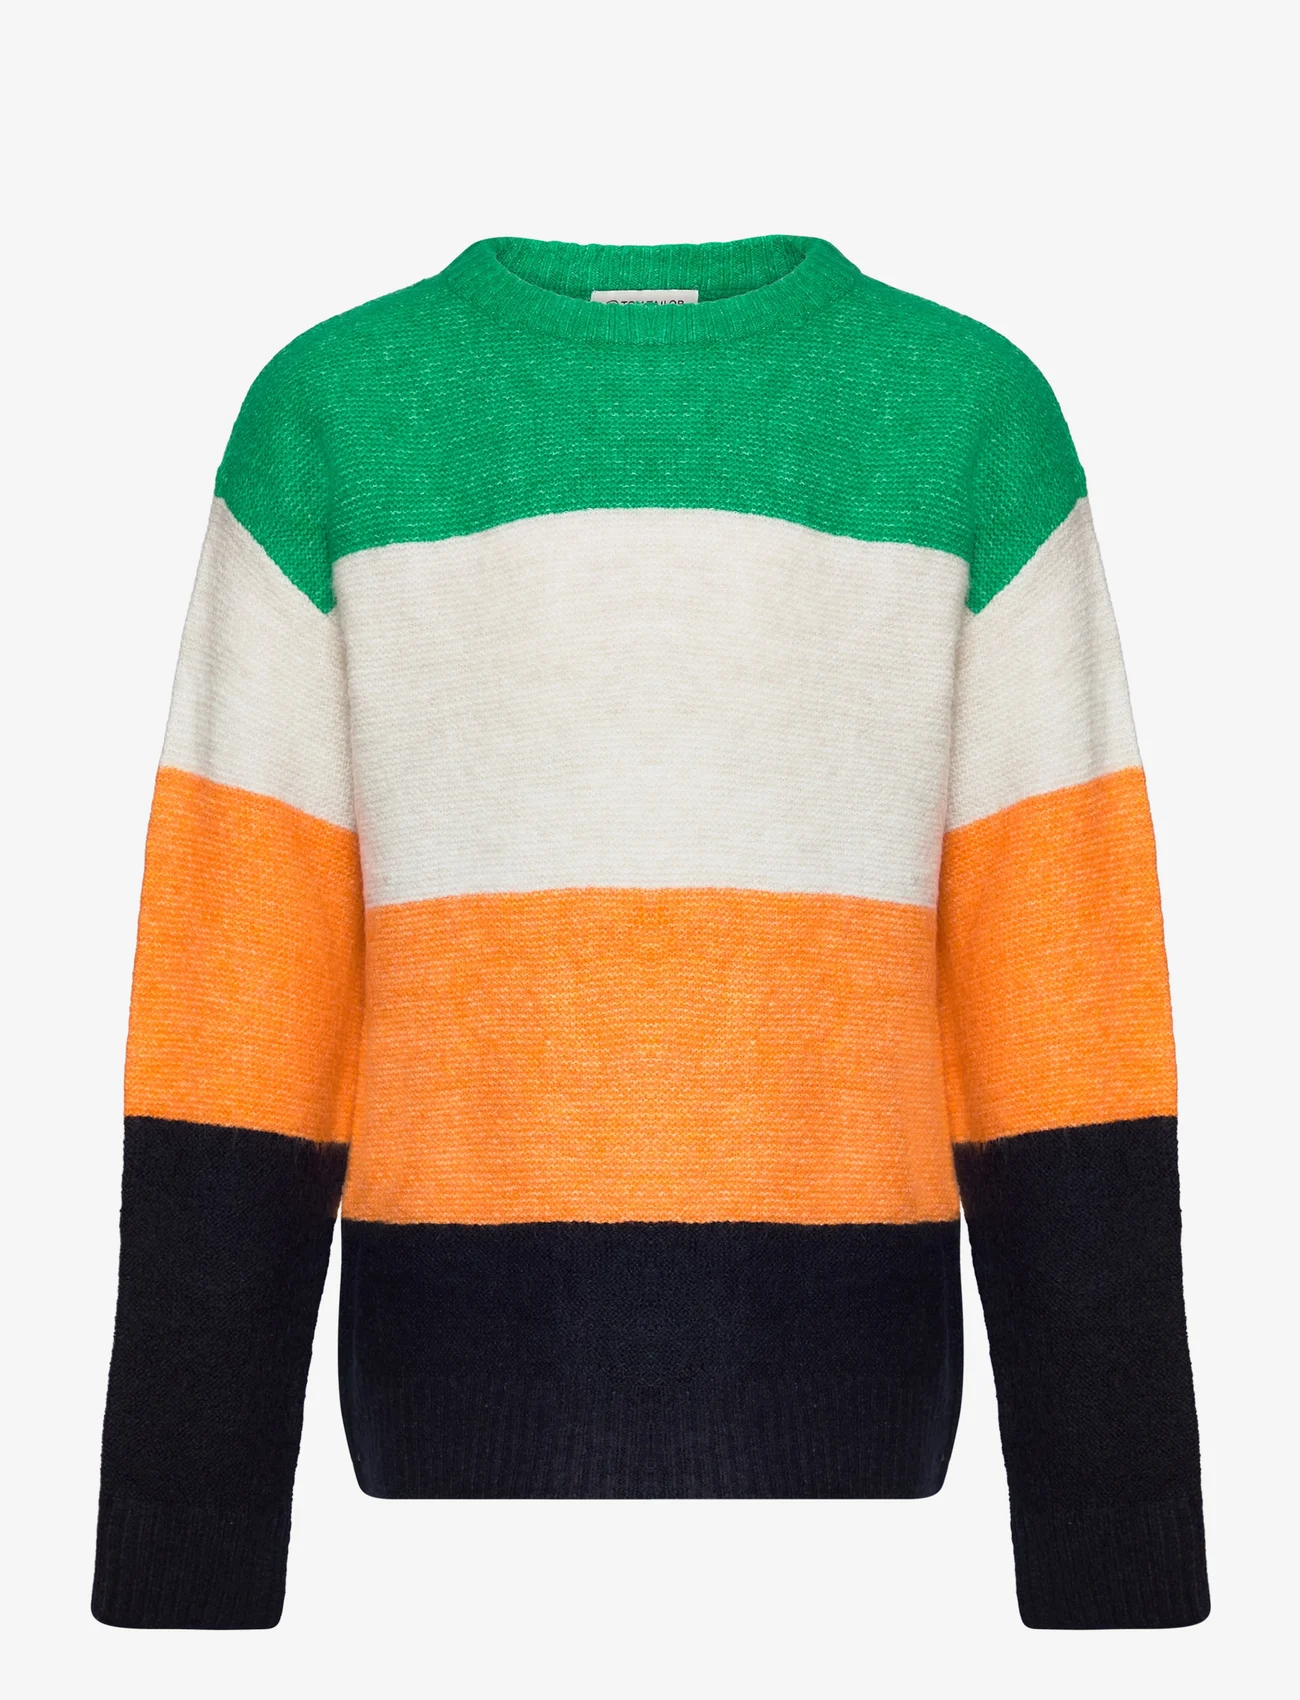 Tom Tailor - striped knit pullover - džemperiai - orange multicolor knit stripe - 0